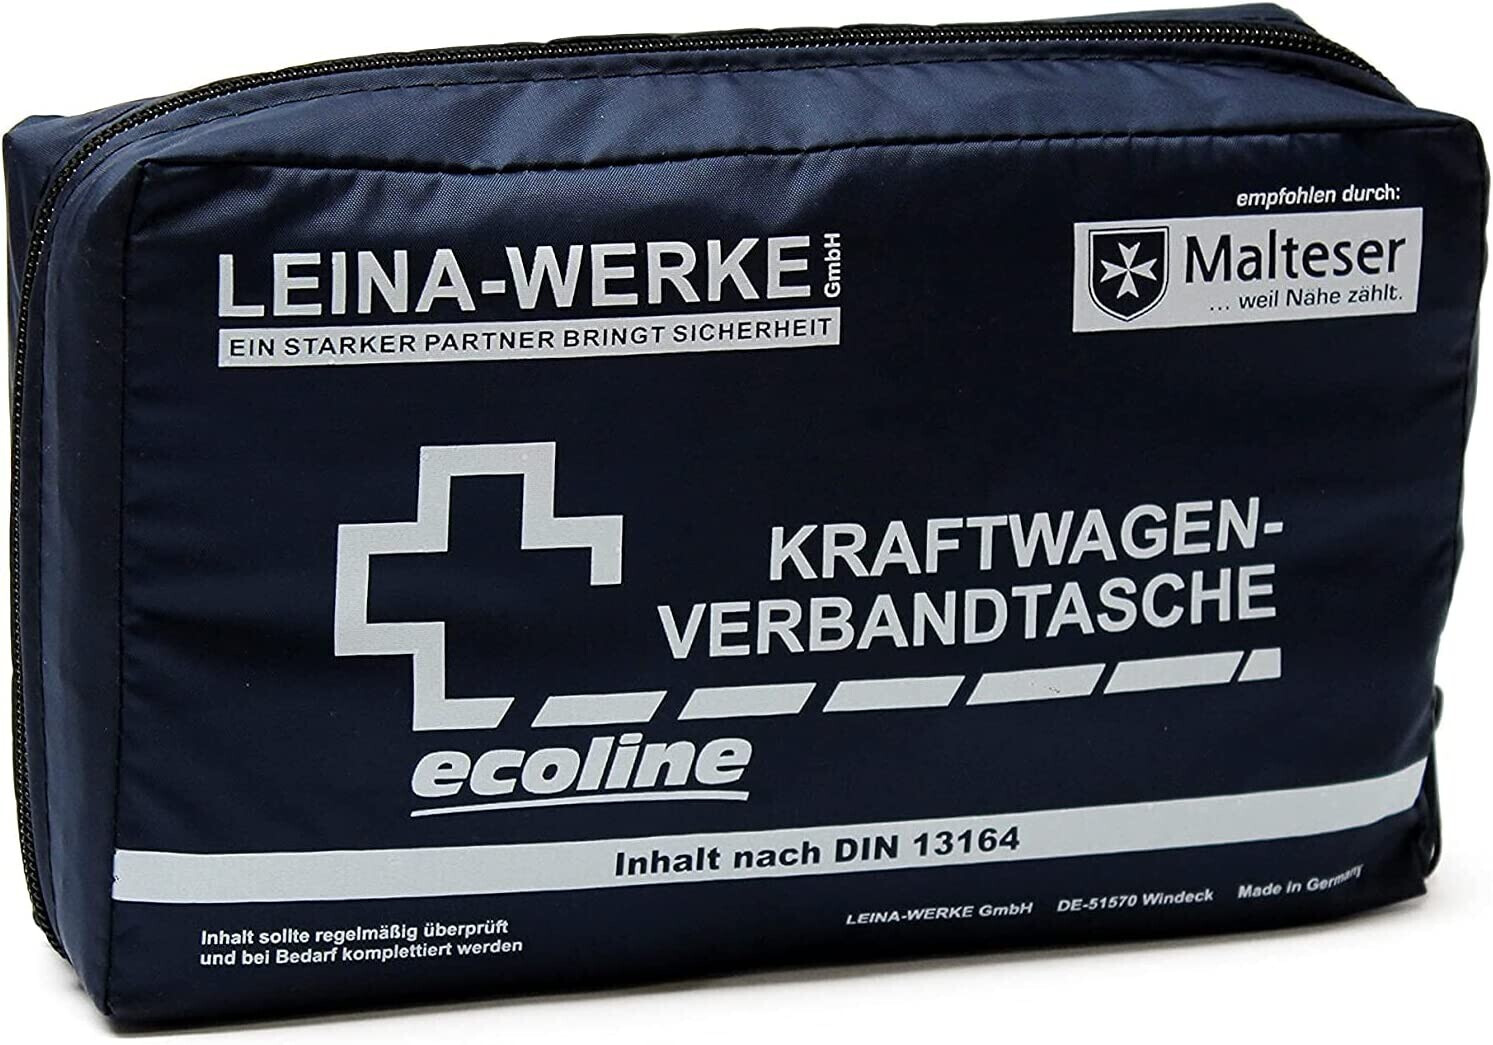 Leina-Werke Kraftwagen Verbandtasche ecoline DIN 13164 inkl. OP